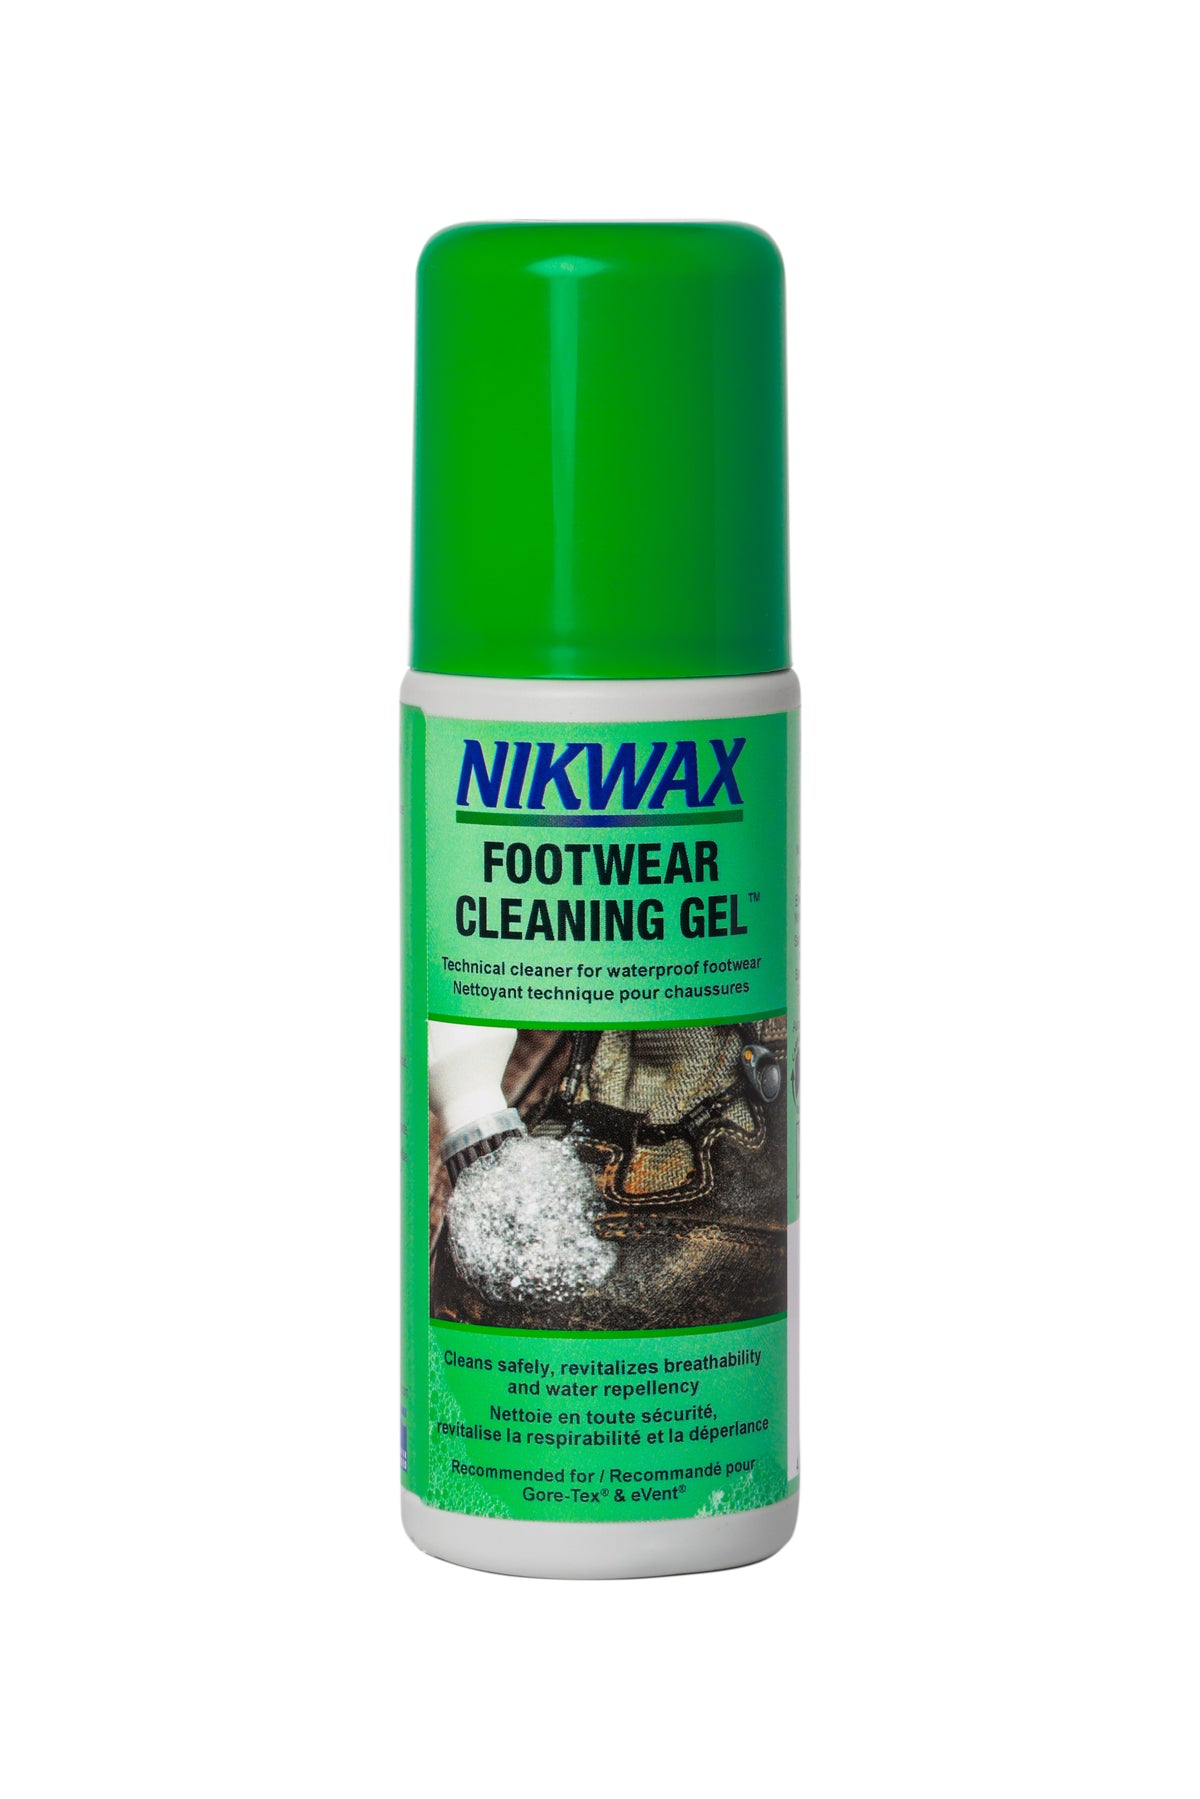 Nikwax Footwear Cleaning Gel - Work World - Workwear, Work Boots, Safety Gear